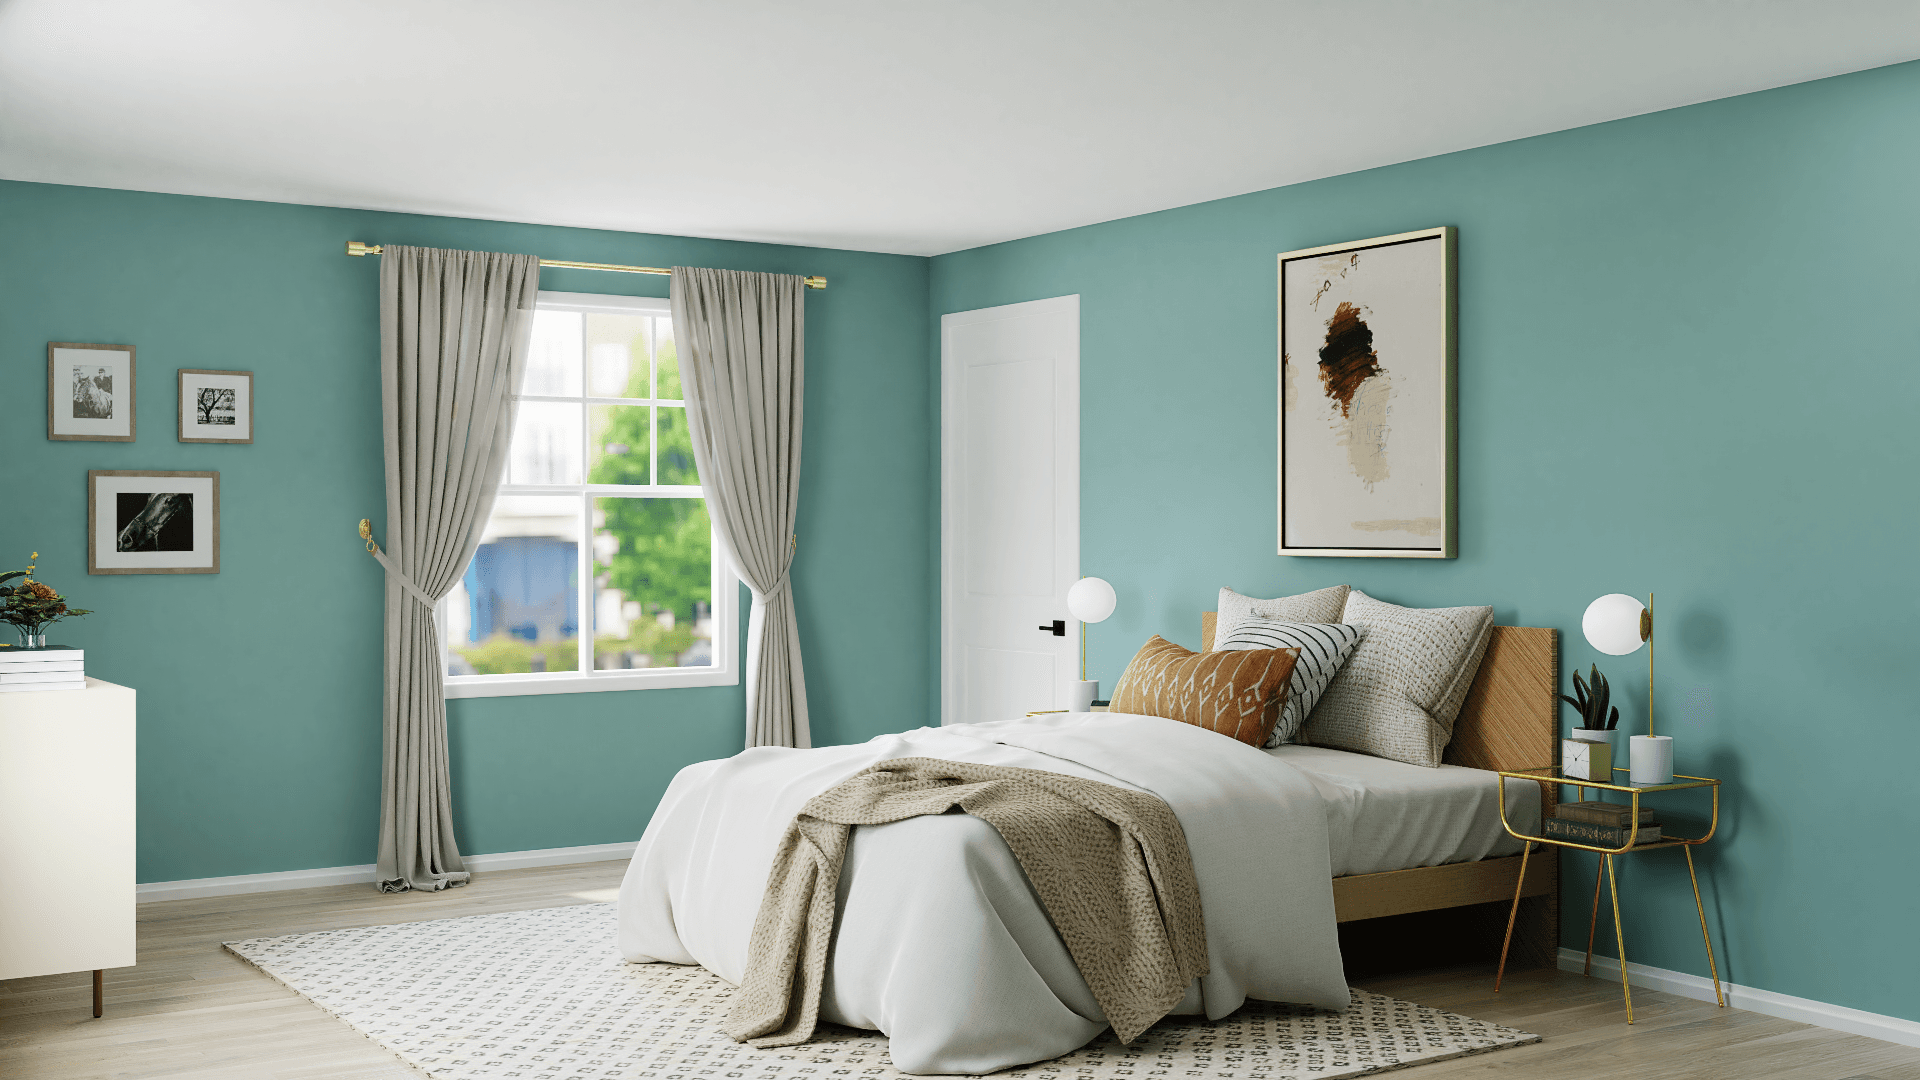 Cool Mint Walls: A Mid-Century Modern Bedroom